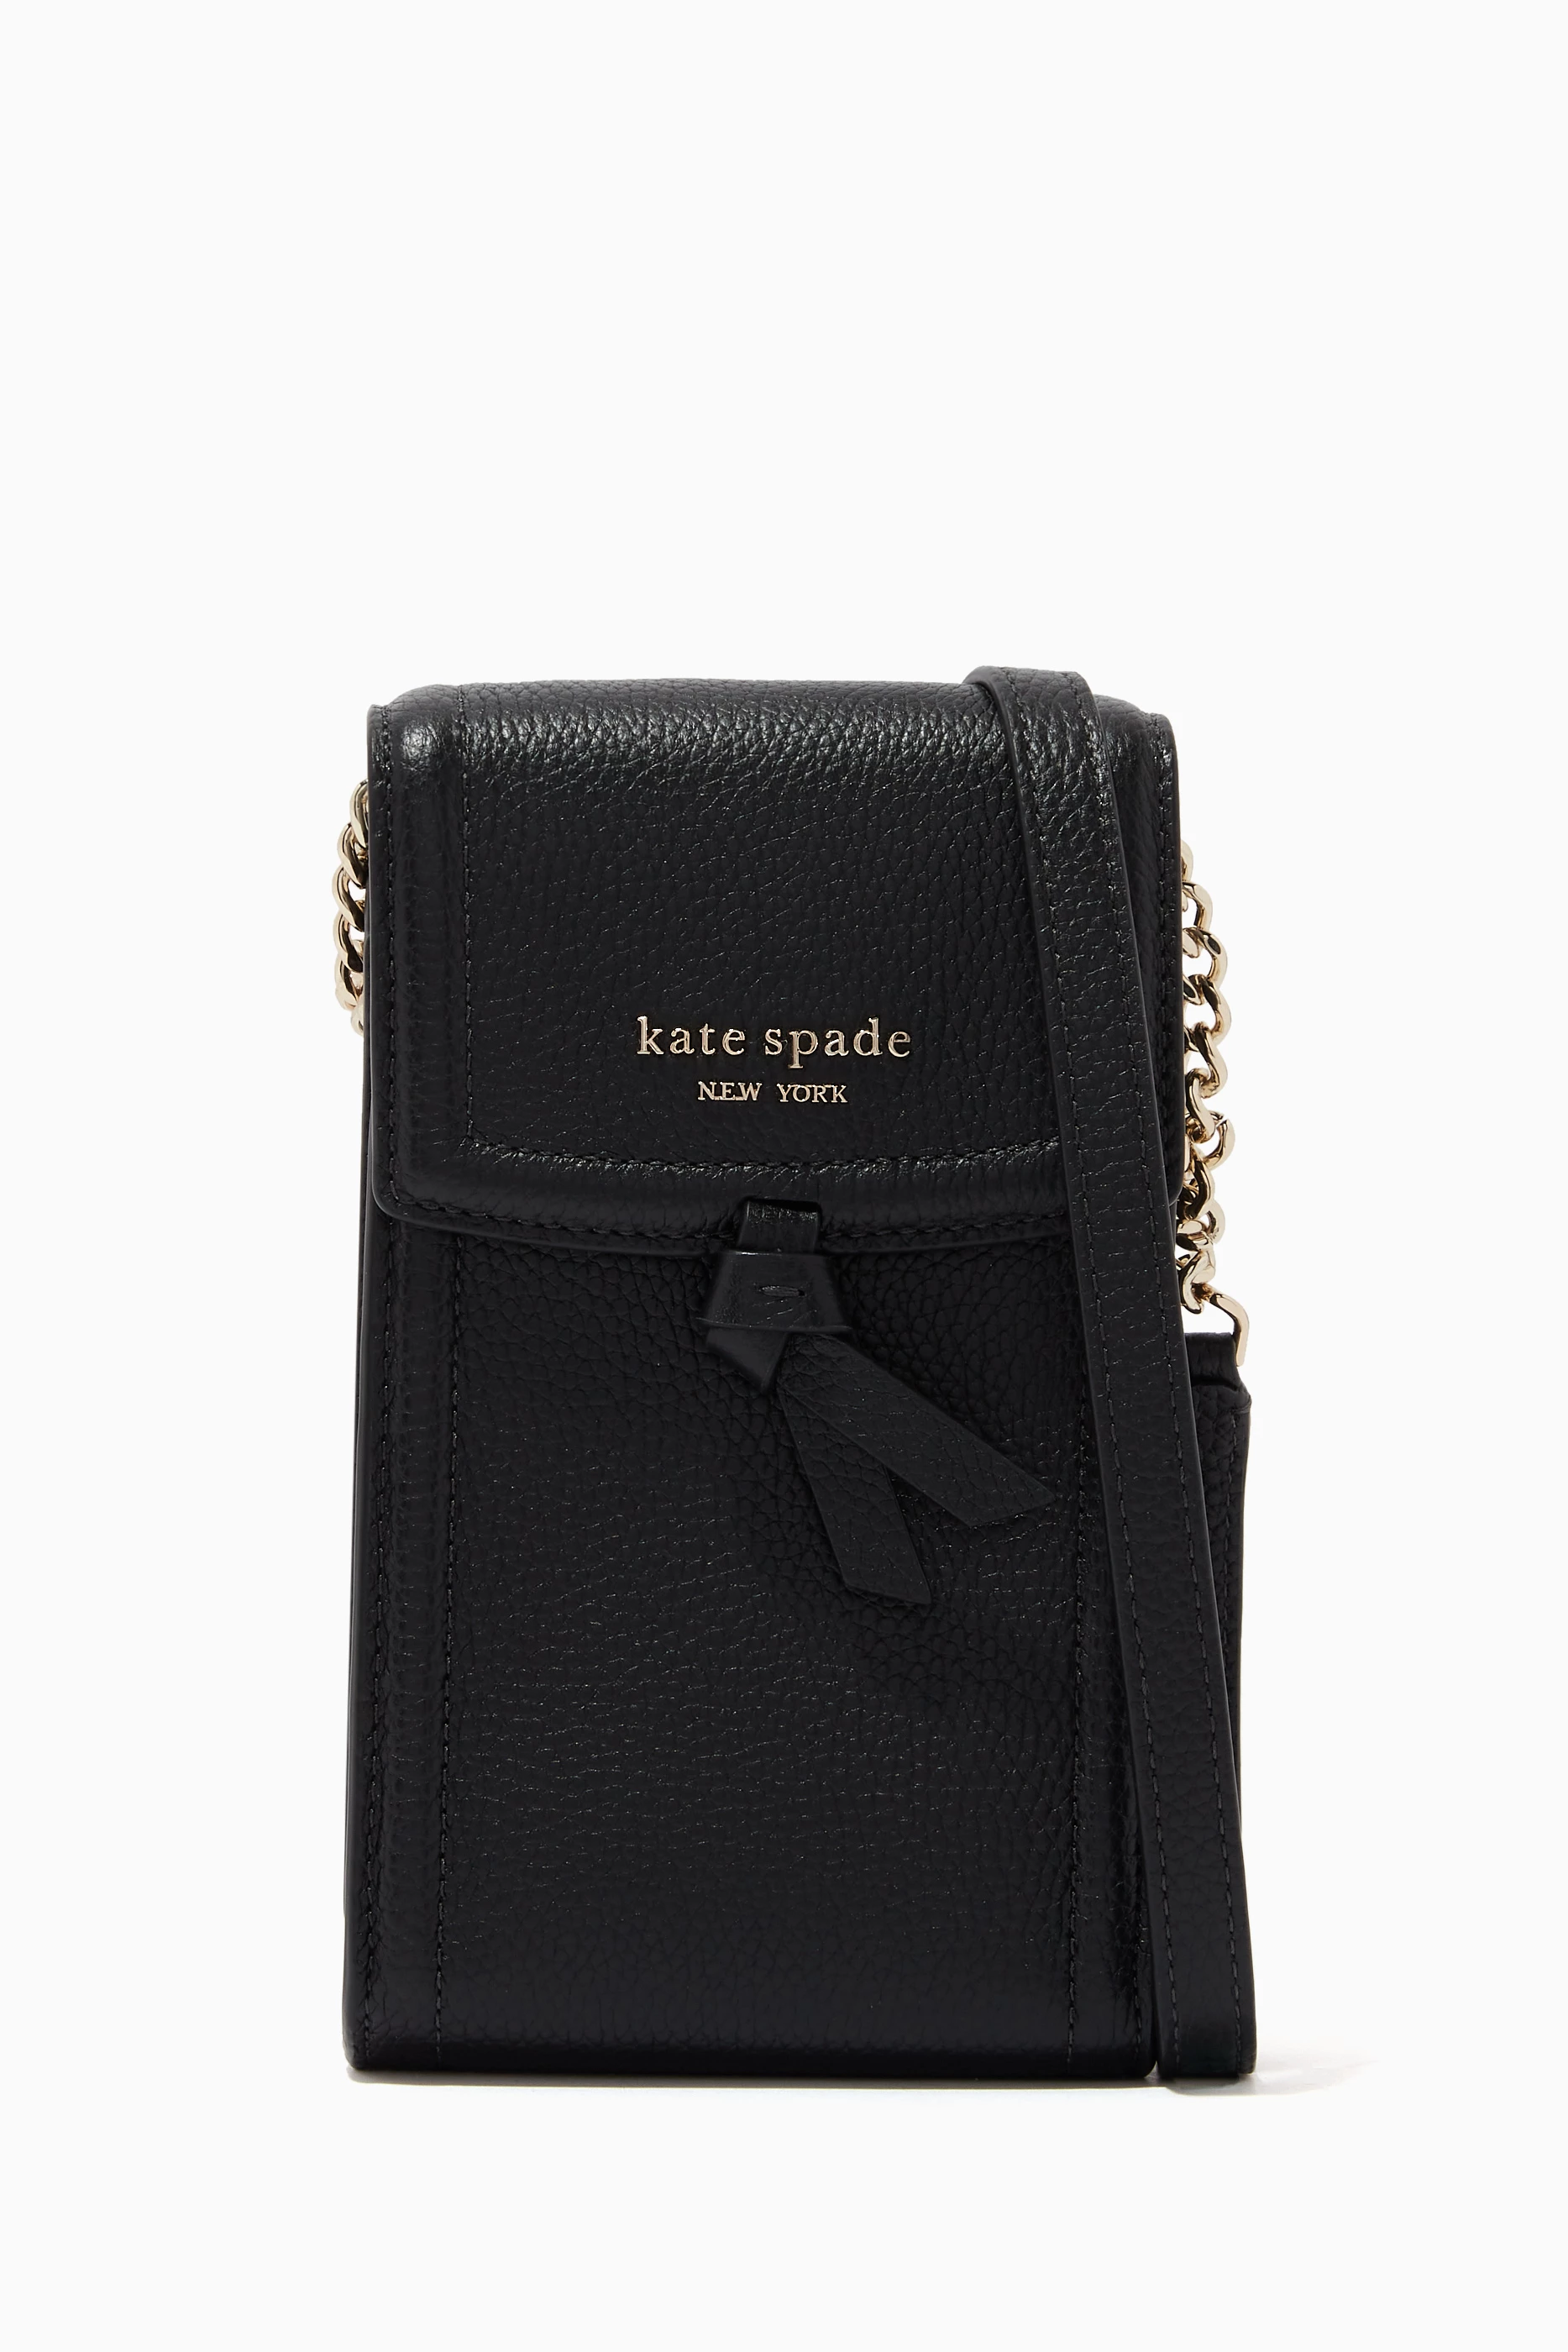 Kate Spade North South Phone Crossbody Bag